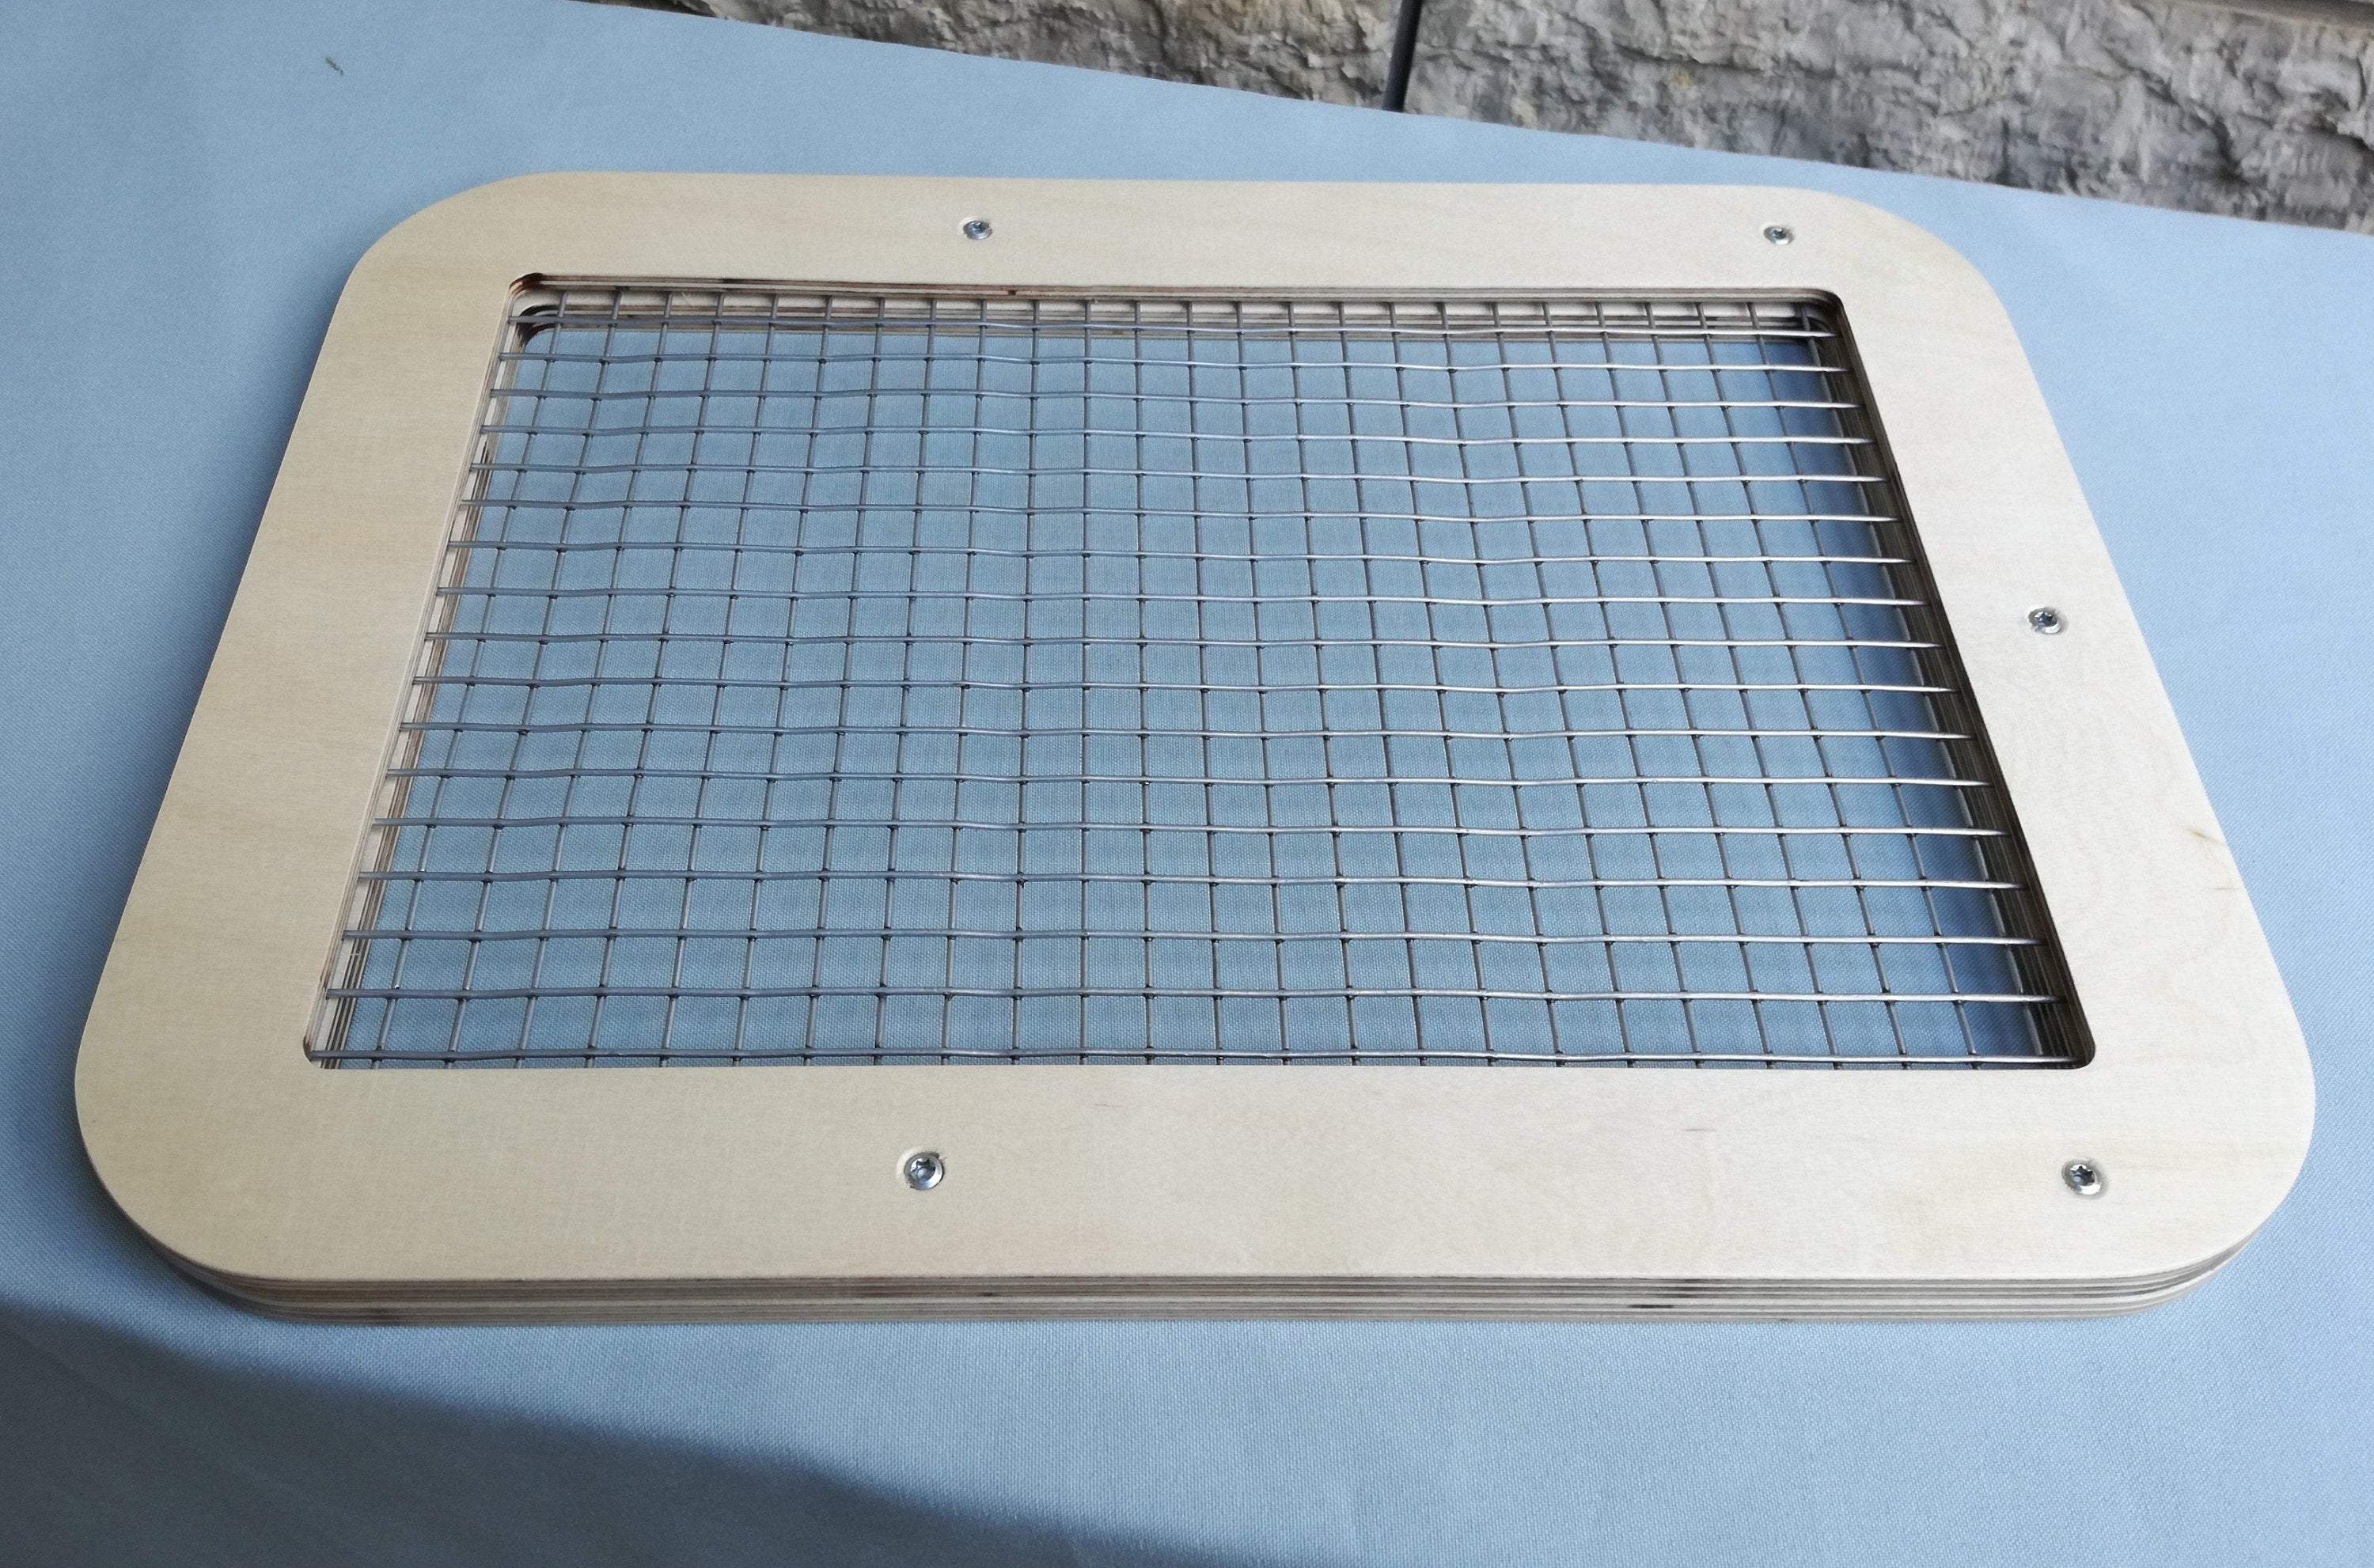 Wire mesh insert for litter trays – BunnyRabbitShop